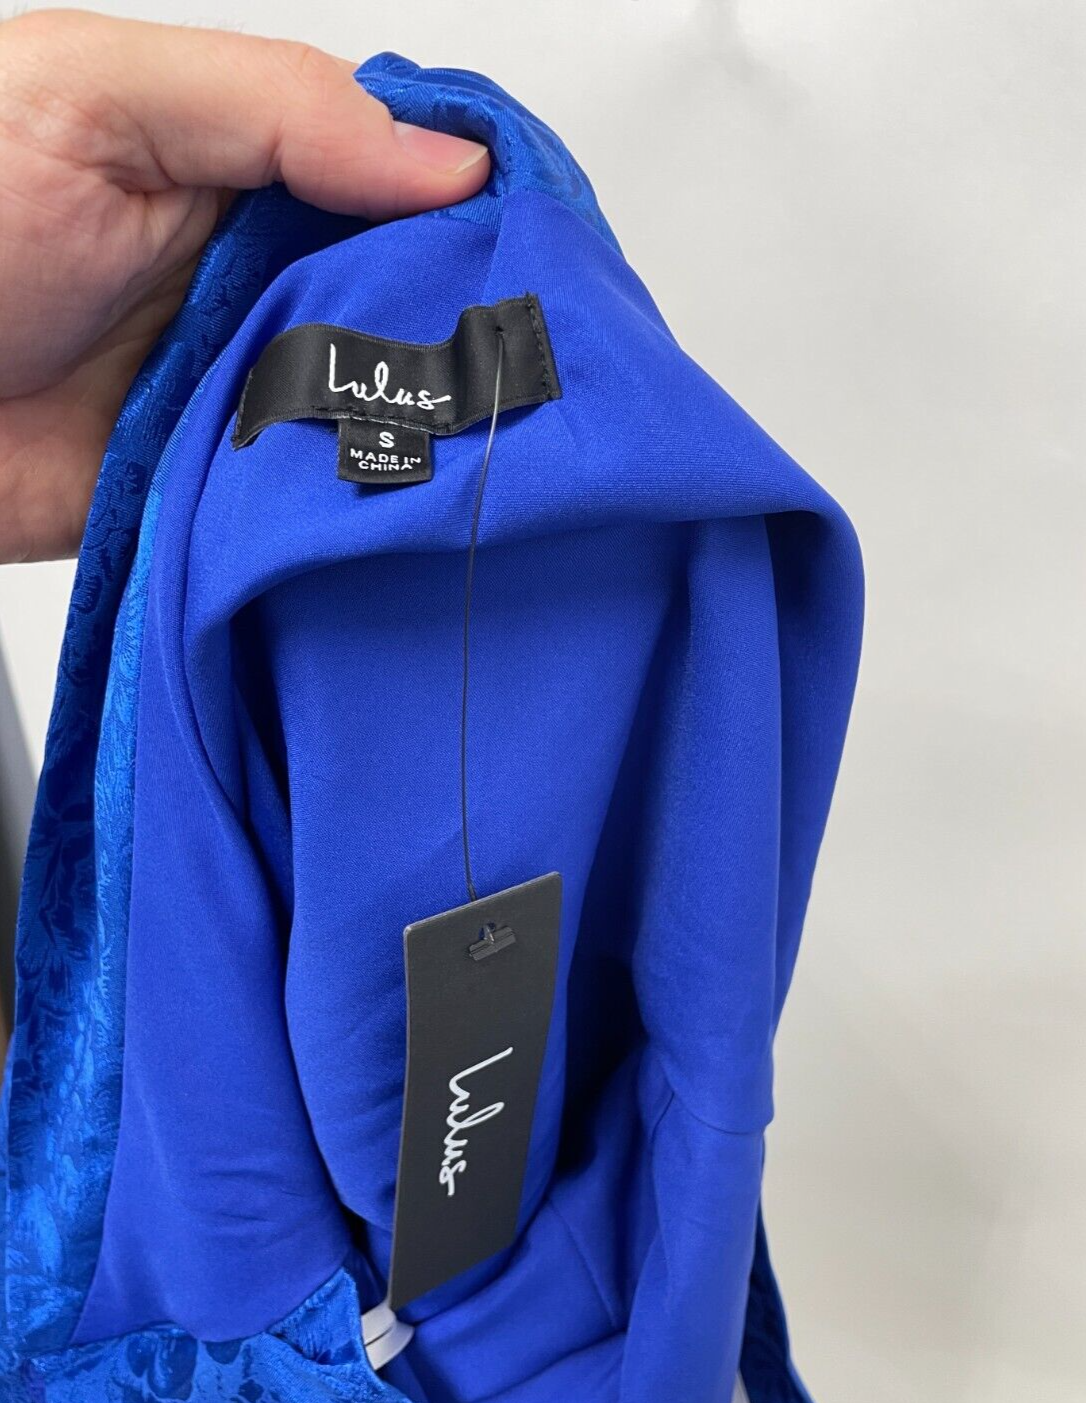 Lulus Women's S Floral Jacquard Satin Midi Dress Royal Blue Cowl Neck Open Back